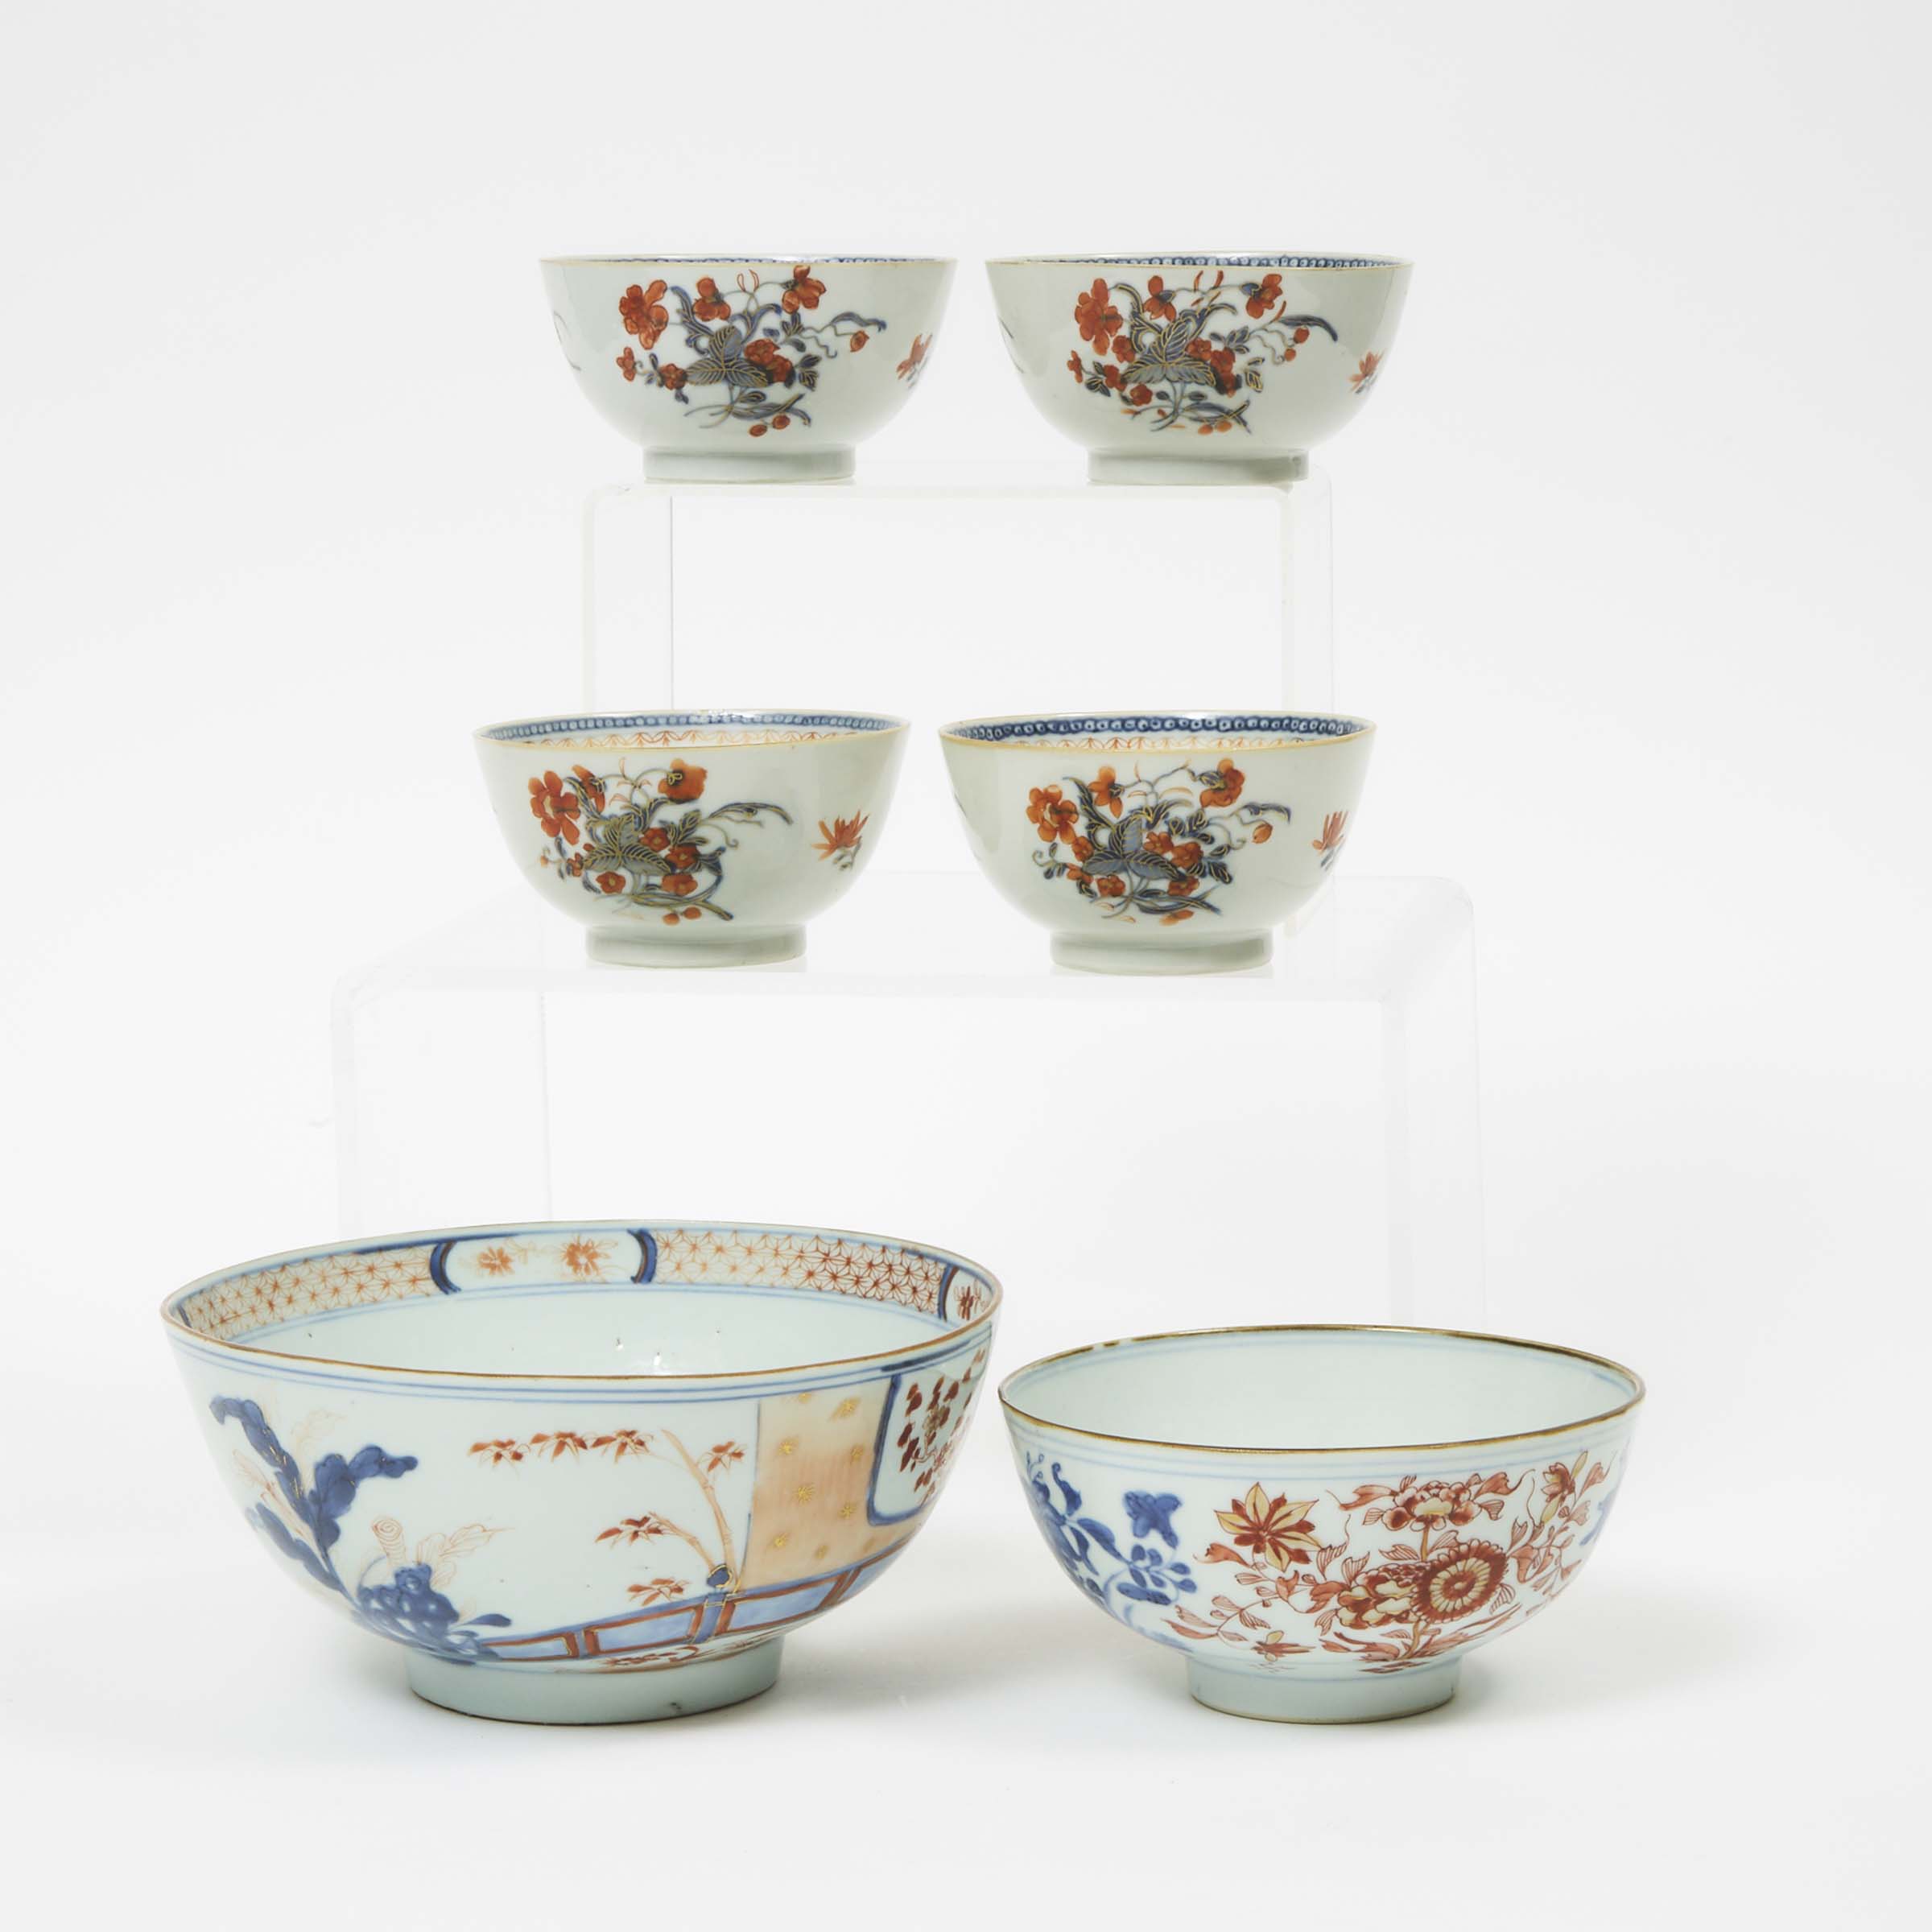 A Group of Six Chinese Imari Bowls, 18th Century